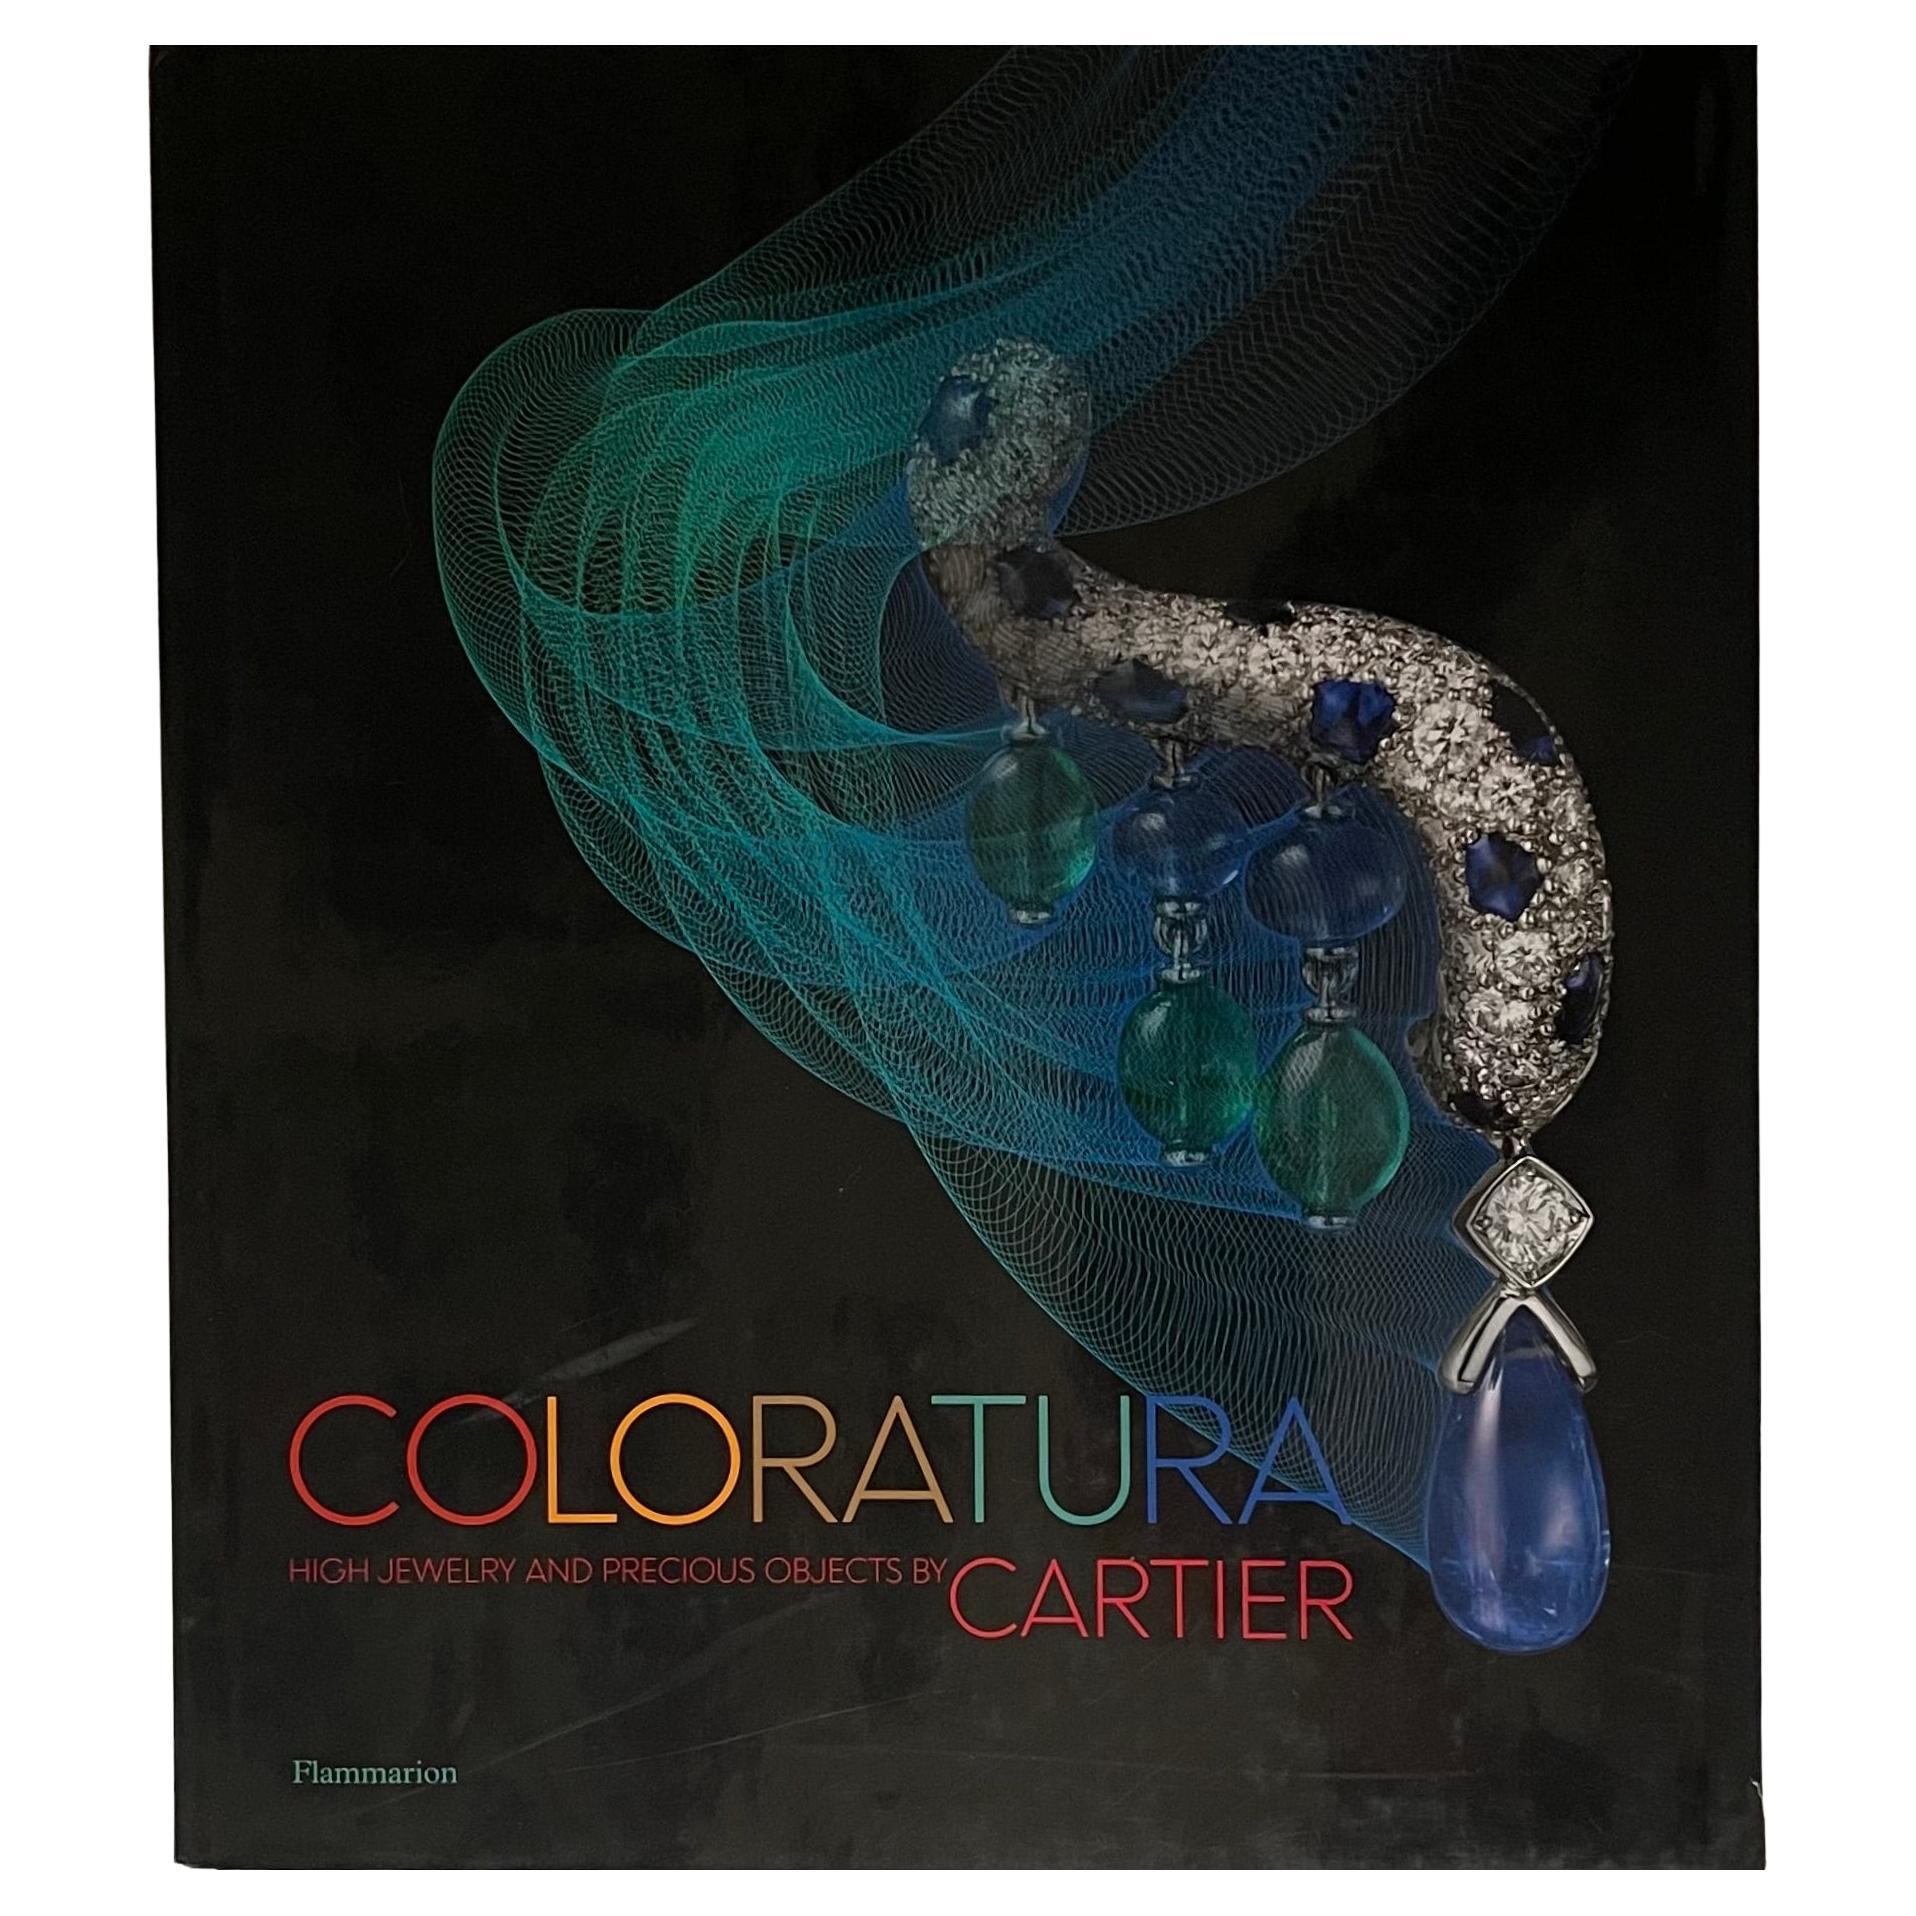 Cartier - Coloratura 1st US ed., 2018